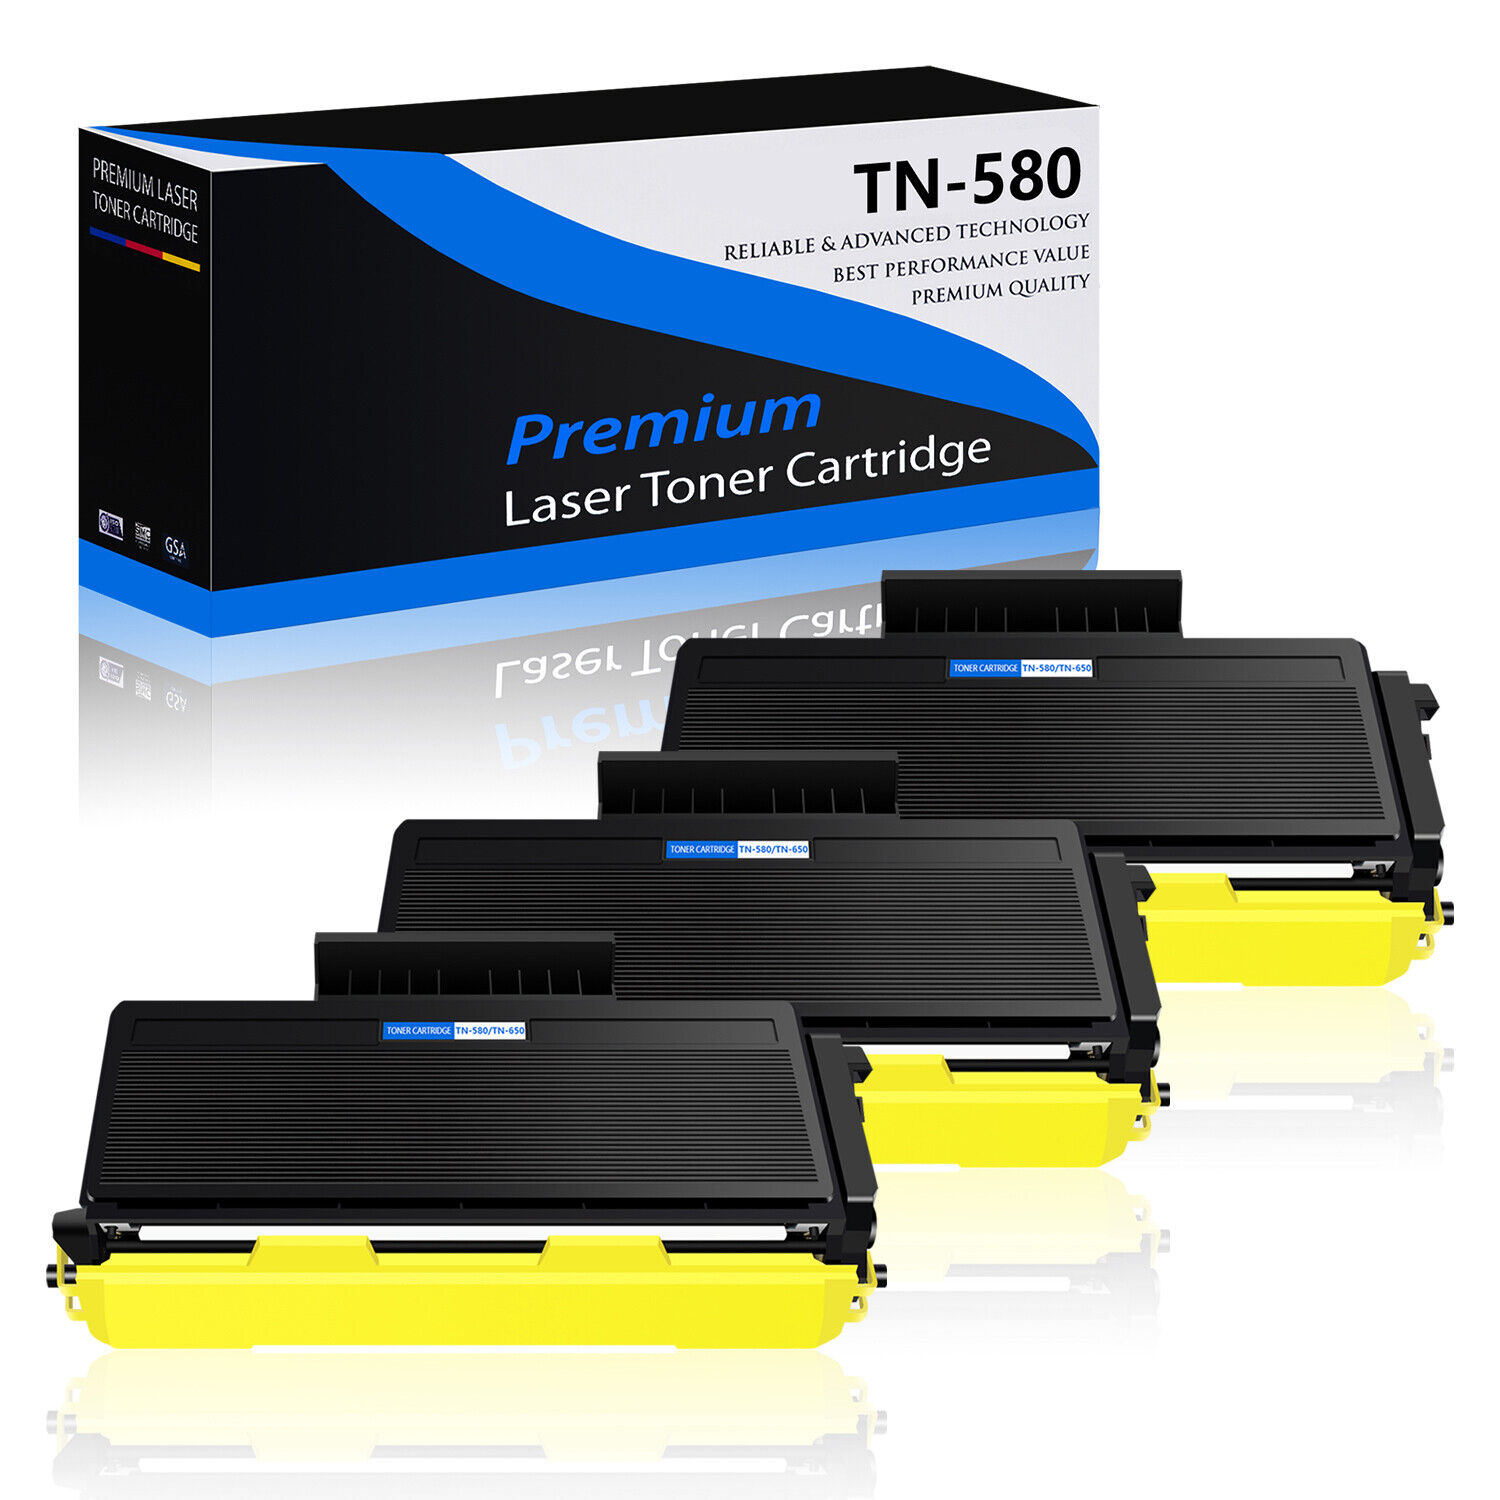 3 Pack TN-580 TN580 BLACK TONER CARTRIDGE for Brother HL-5240 MFC-8460N Printer